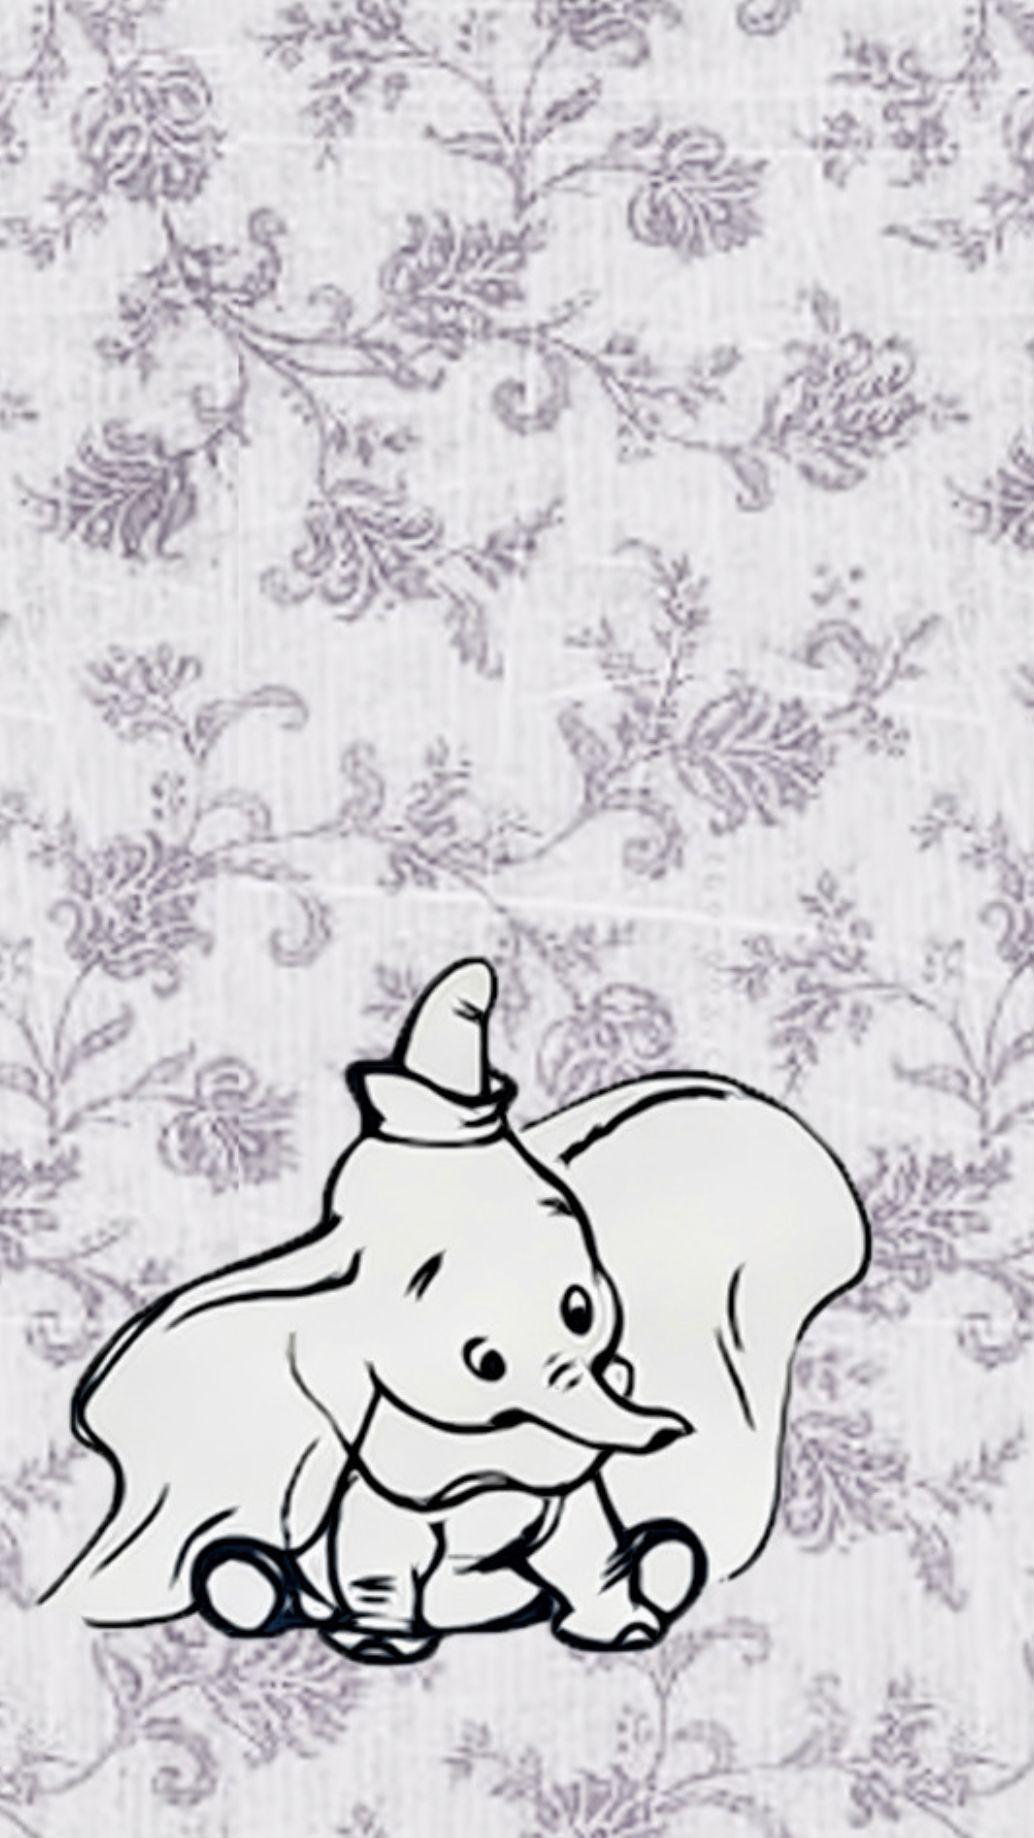 Dumbo-Wallpaper-dumbo-5997947-1024-768 - Disney in your Day